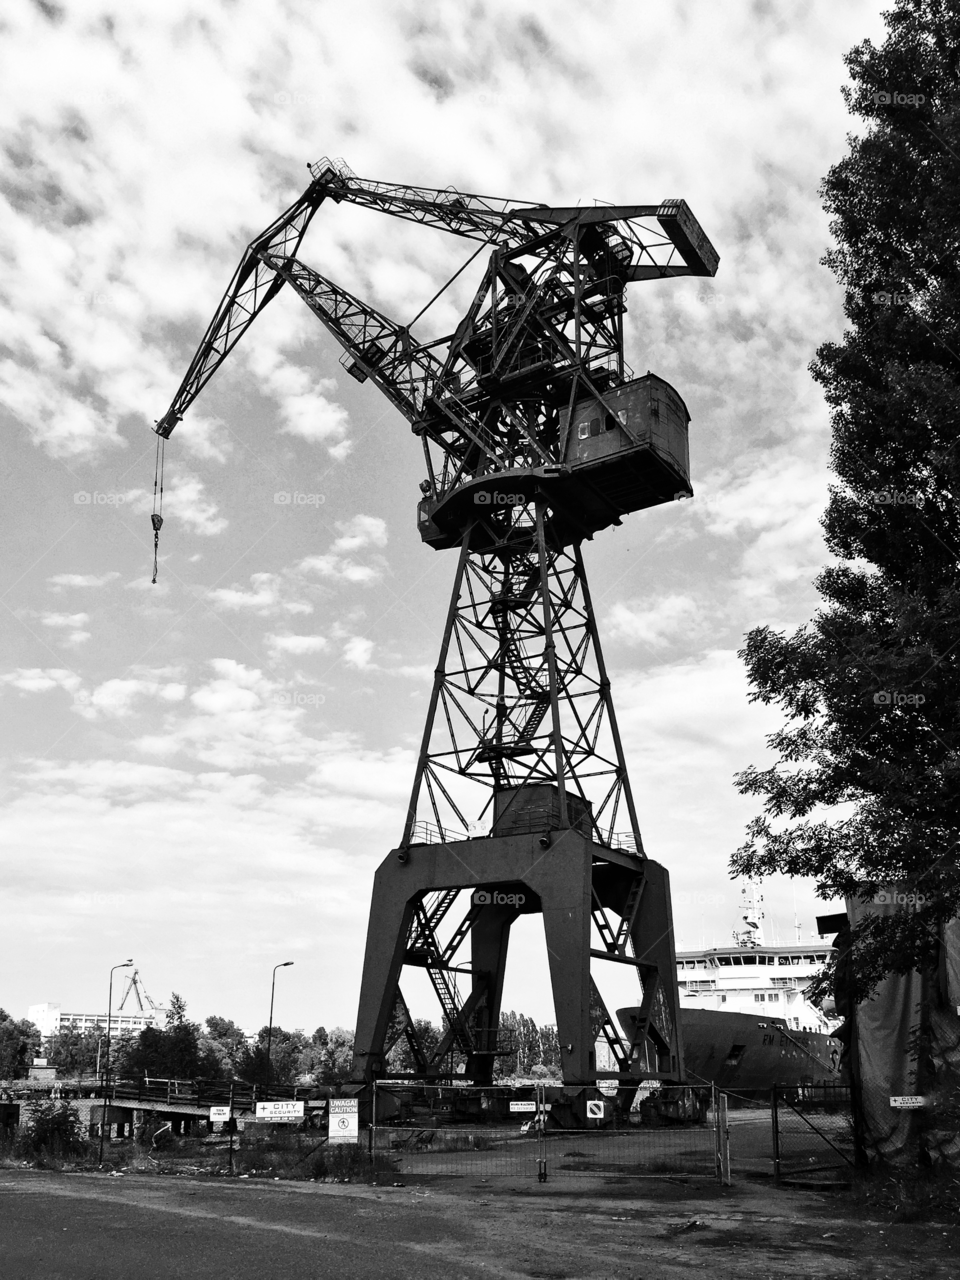 Shipyard crane